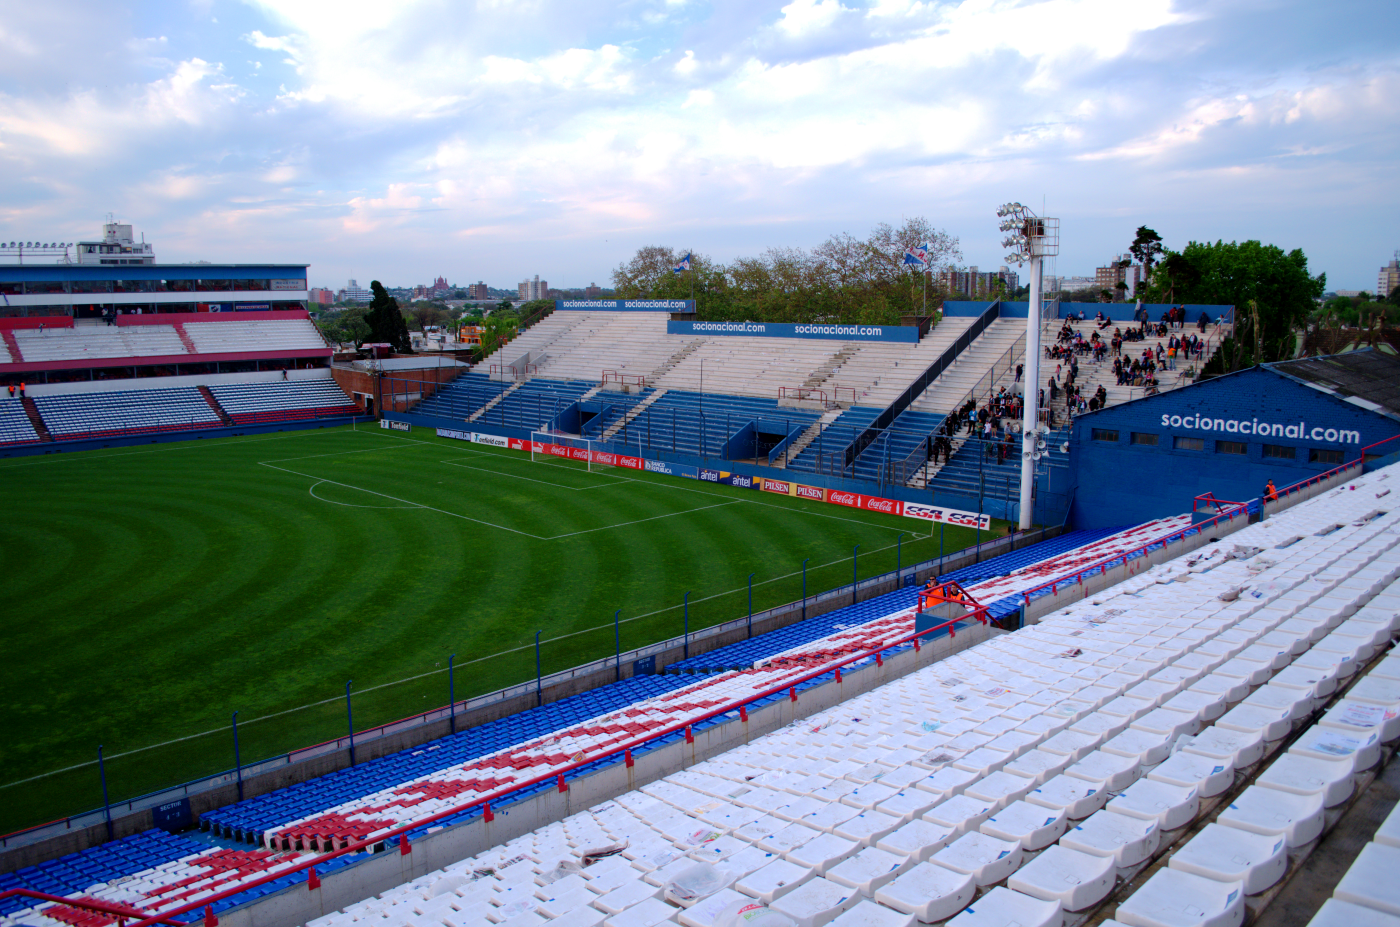 Championes de futbol Club Nacional de football — Stadium